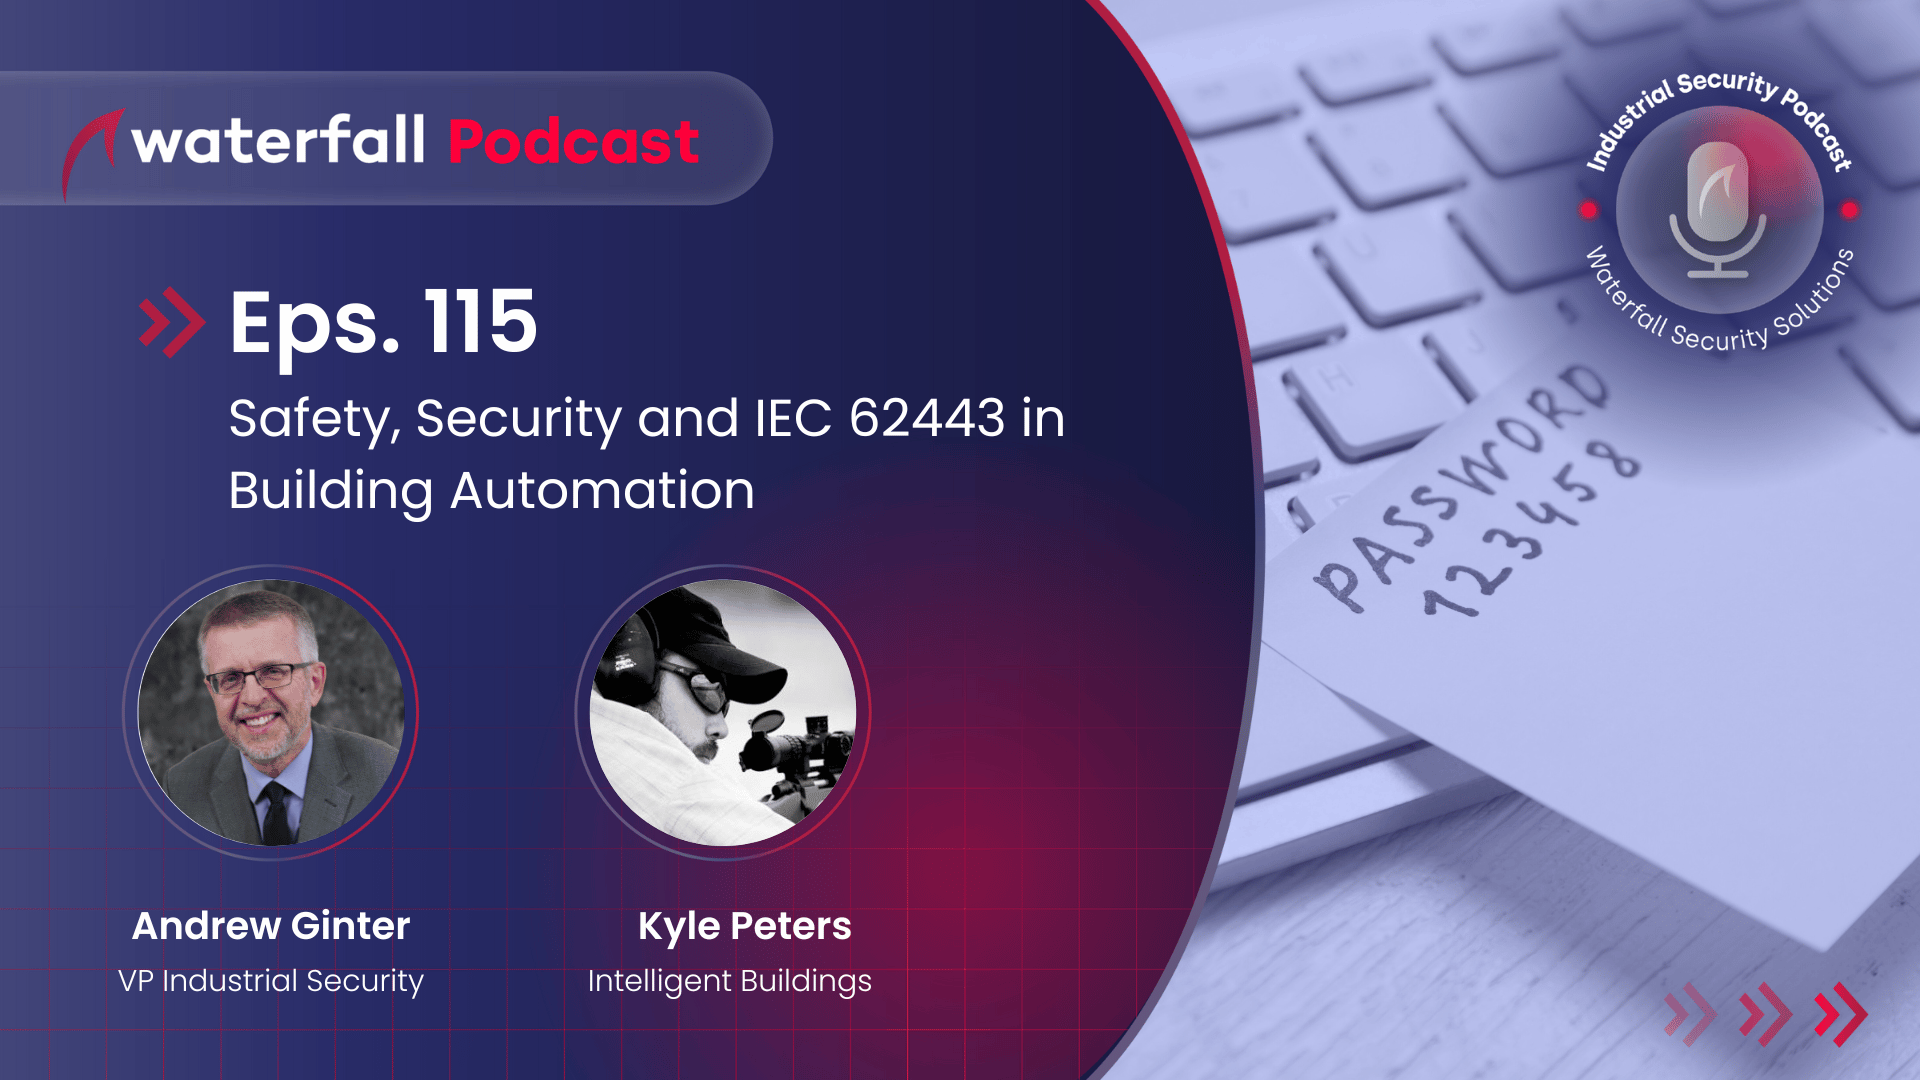 Podcast Episode 115 - Kyle Peters - Building Automation IEC 62443